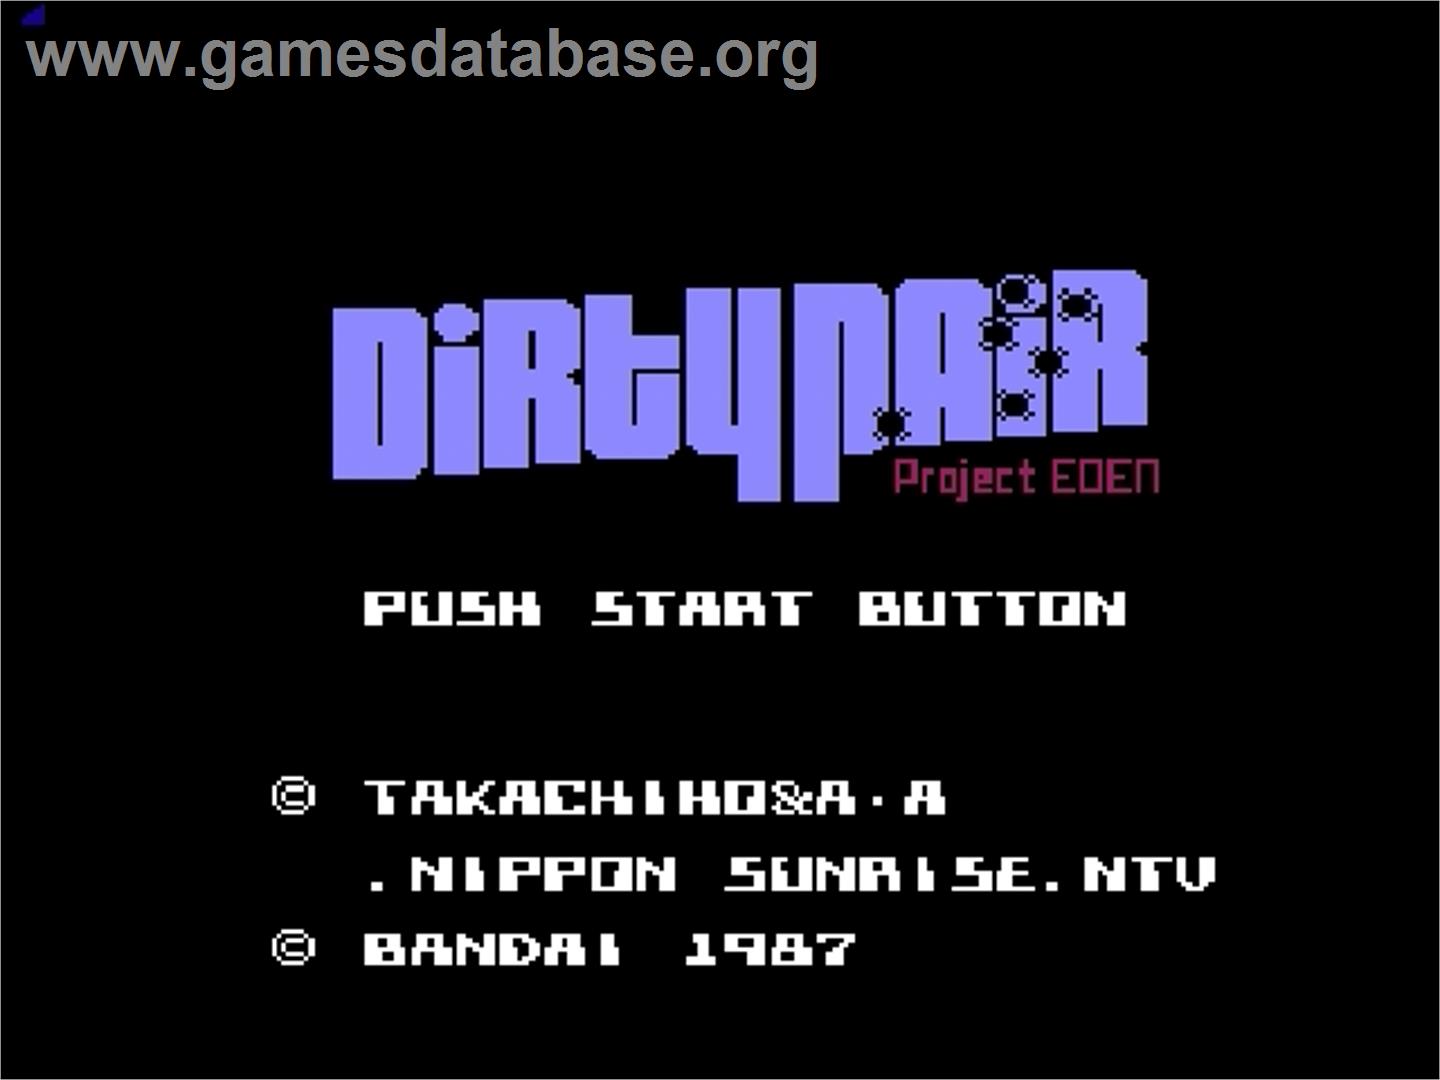 Dirty Pair - Project Eden - Nintendo Famicom Disk System - Artwork - Title Screen